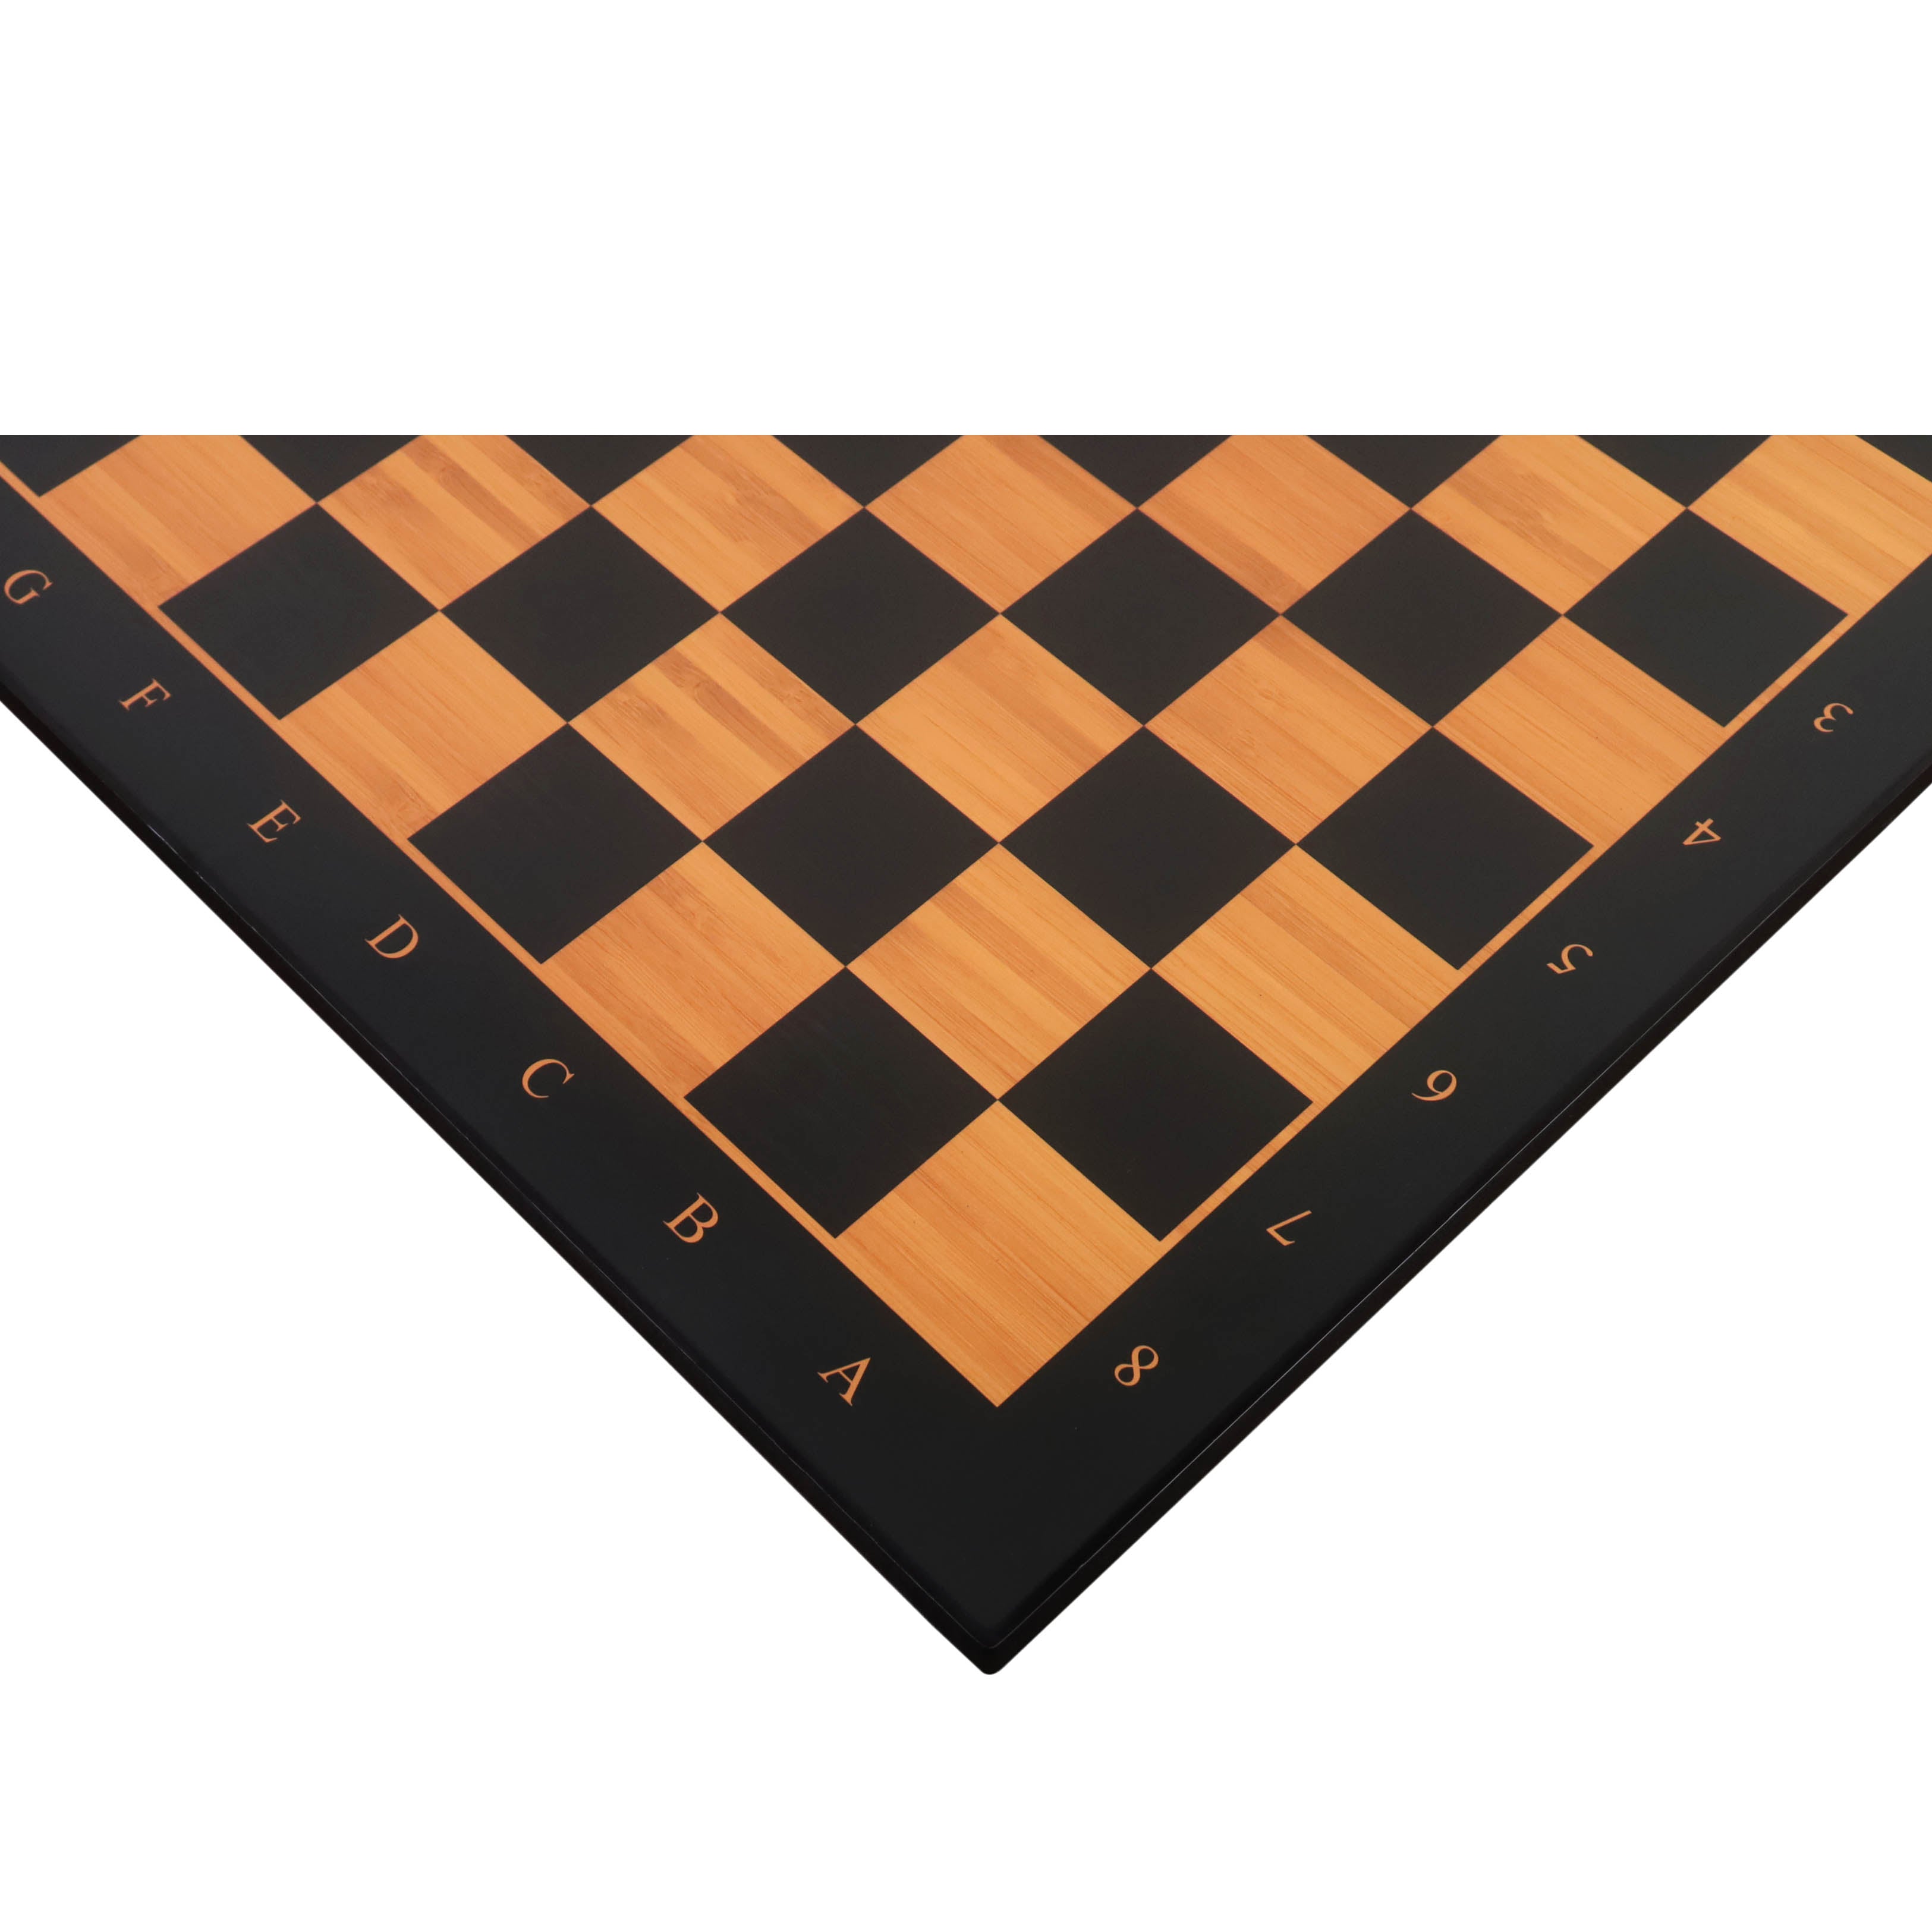 Buy Printed Chess Boards | Royal Chess Mall